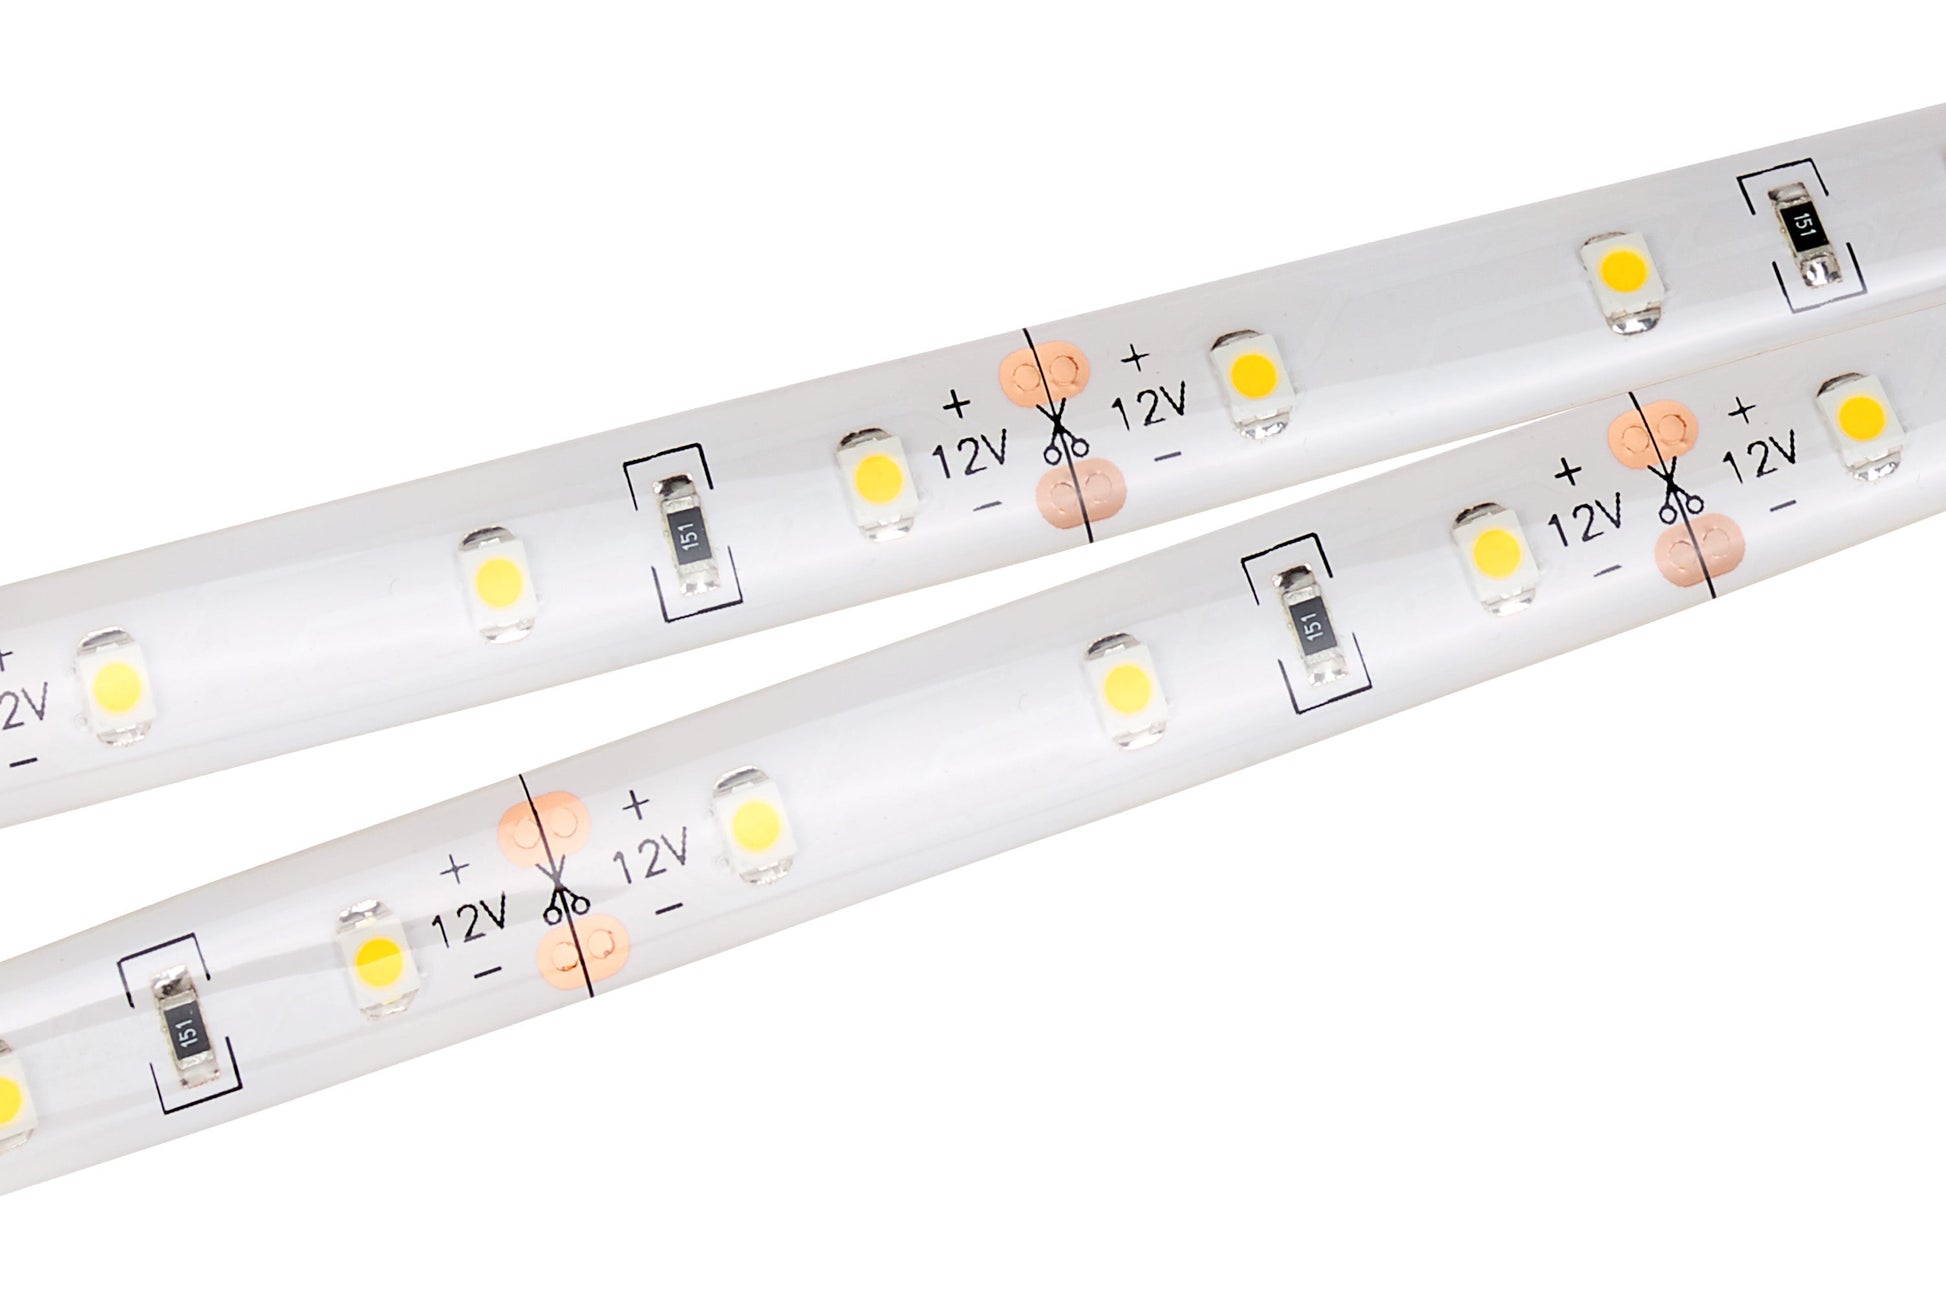 LR Technology Splash-Proof LED Tape Strip Light Kit - White, 5m - maplin.co.uk